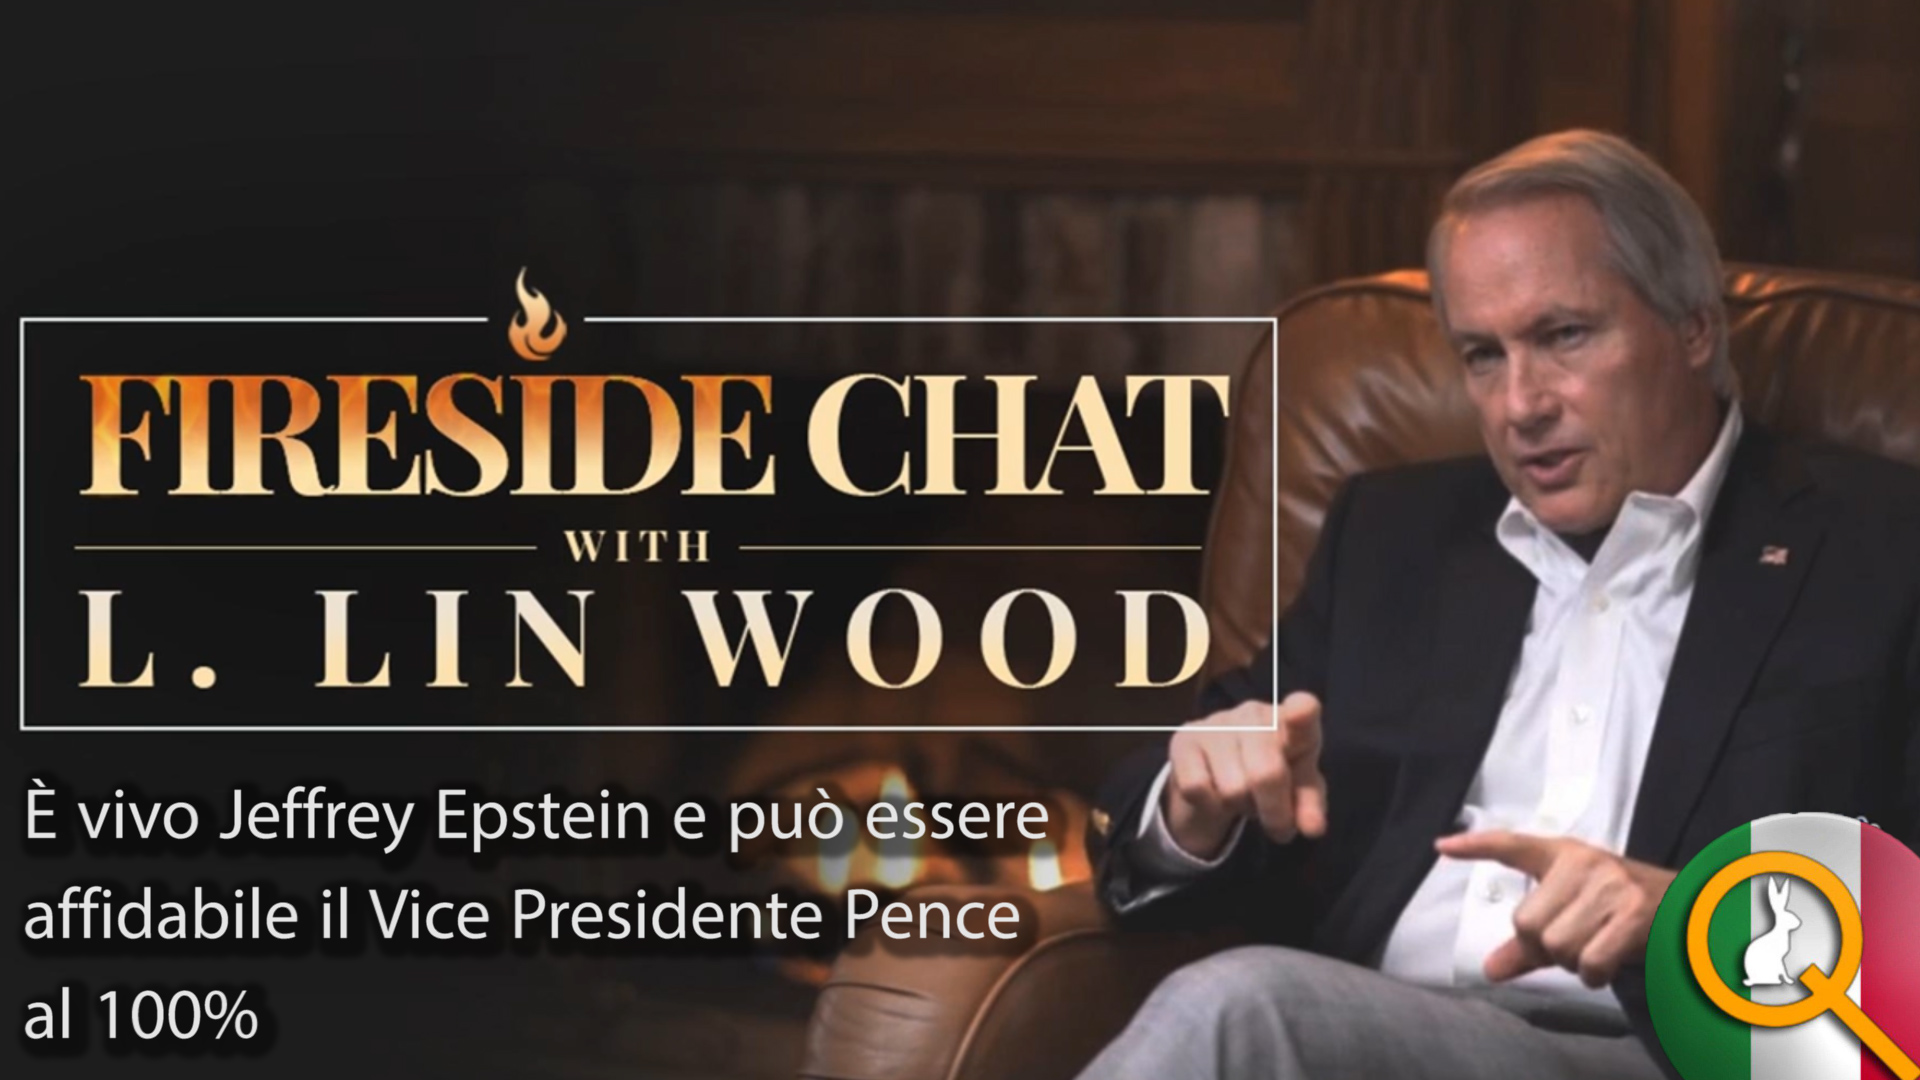 Lin Wood Fireside Chat 4 - È vivo Jeffrey Epstein e può essere affidabile il Vice Presidente Pence al 100%?